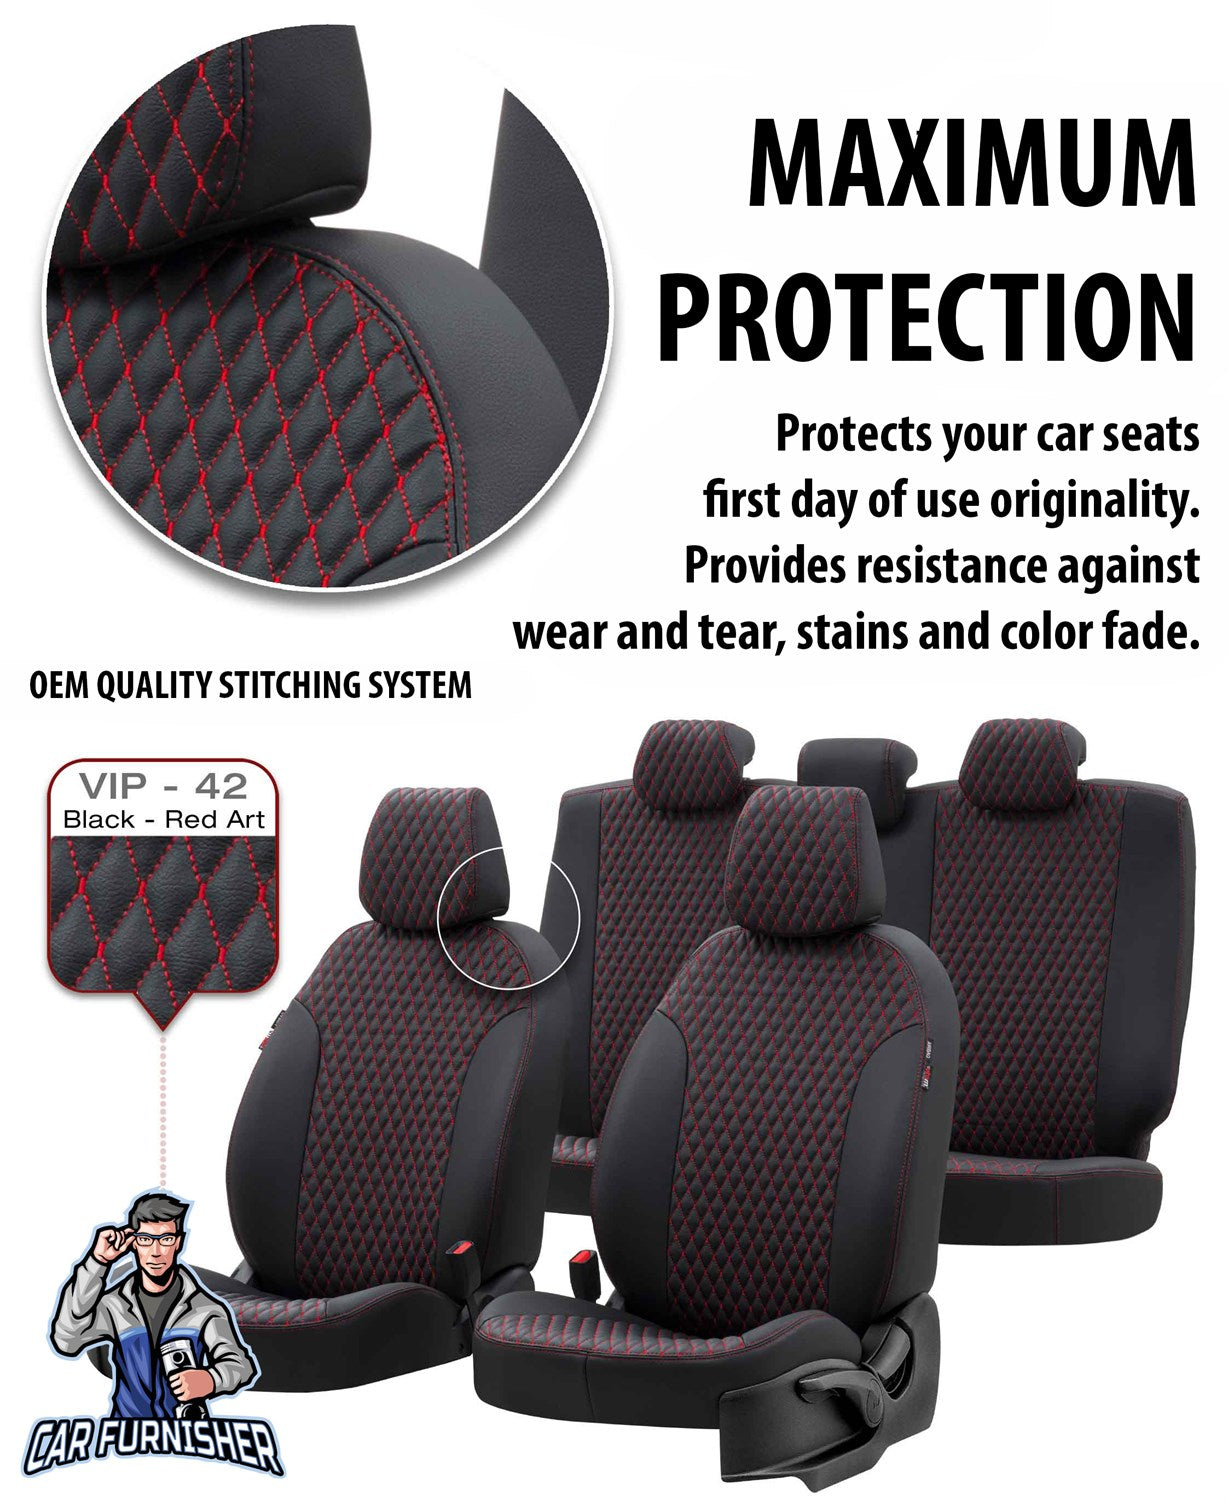 Volkswagen Passat Seat Cover Amsterdam Leather Design Black Leather